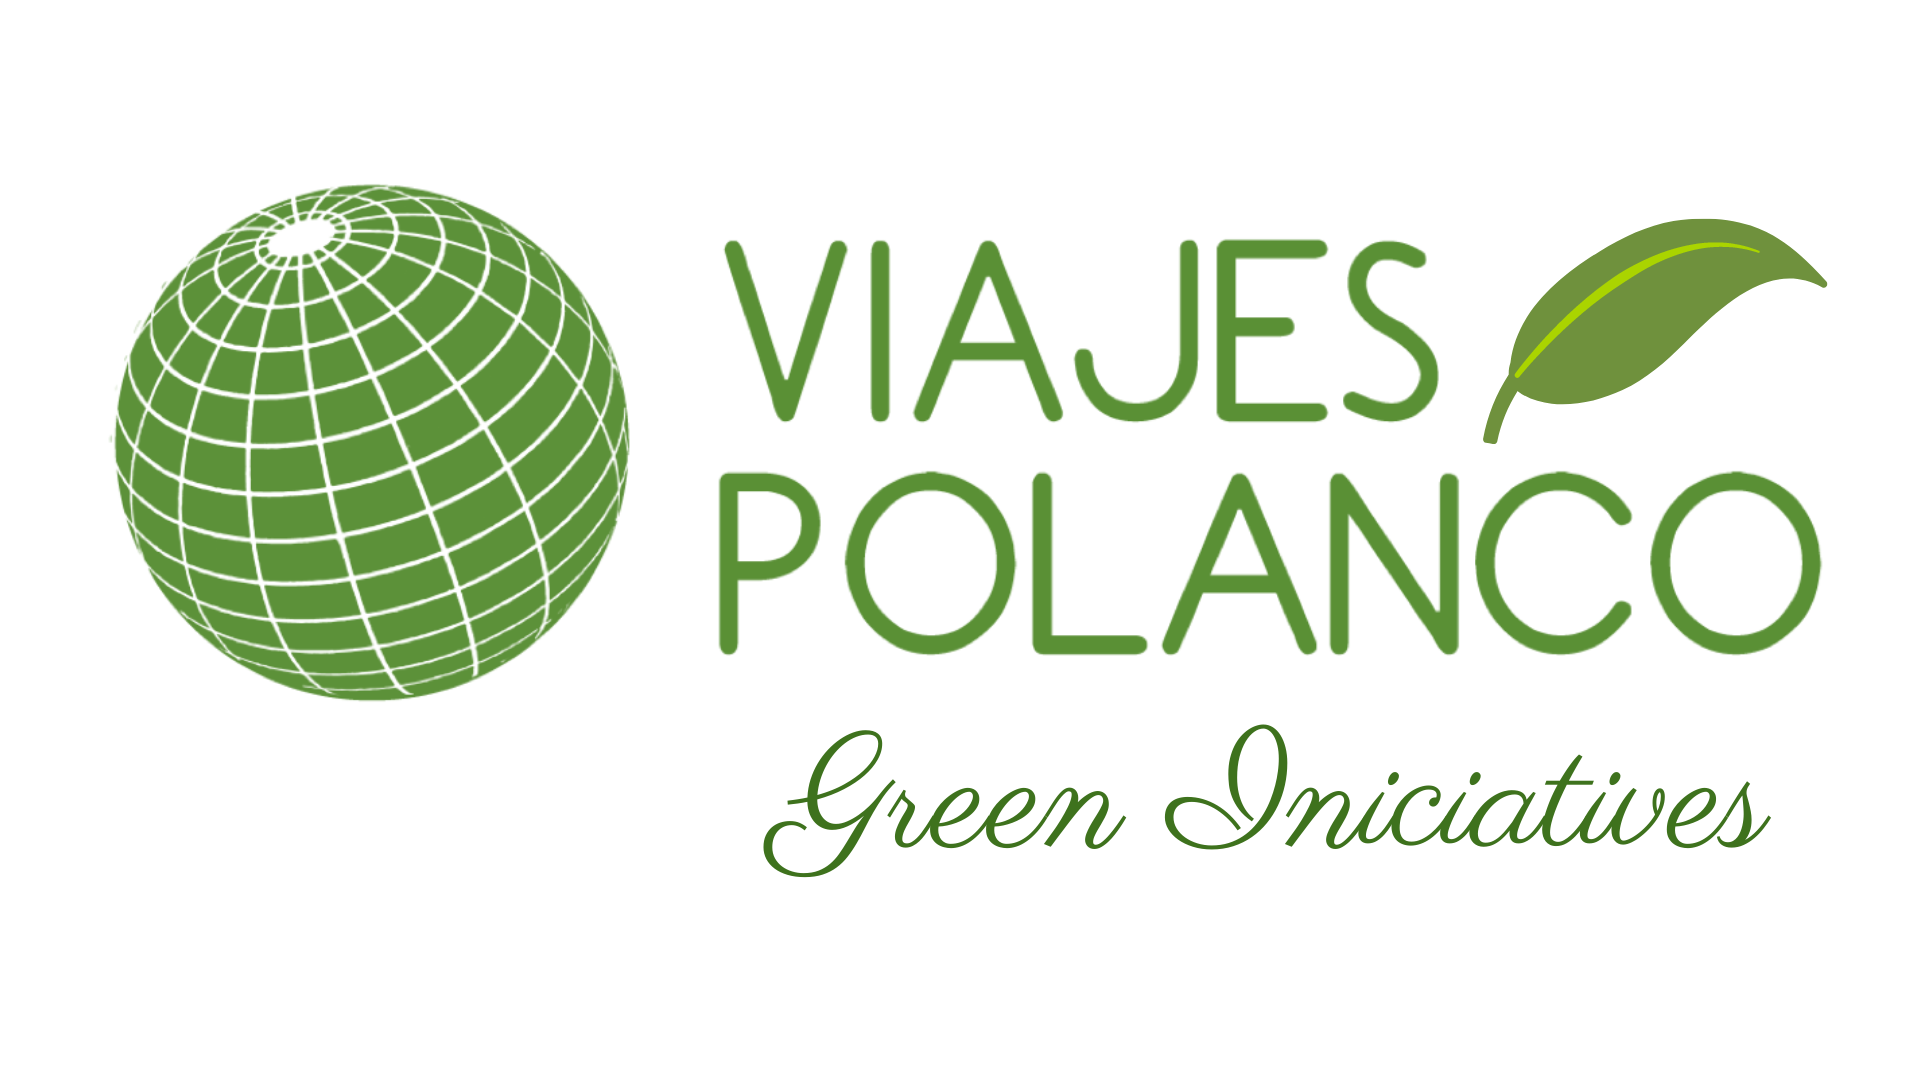 Viajes Polanco Green Initiatives